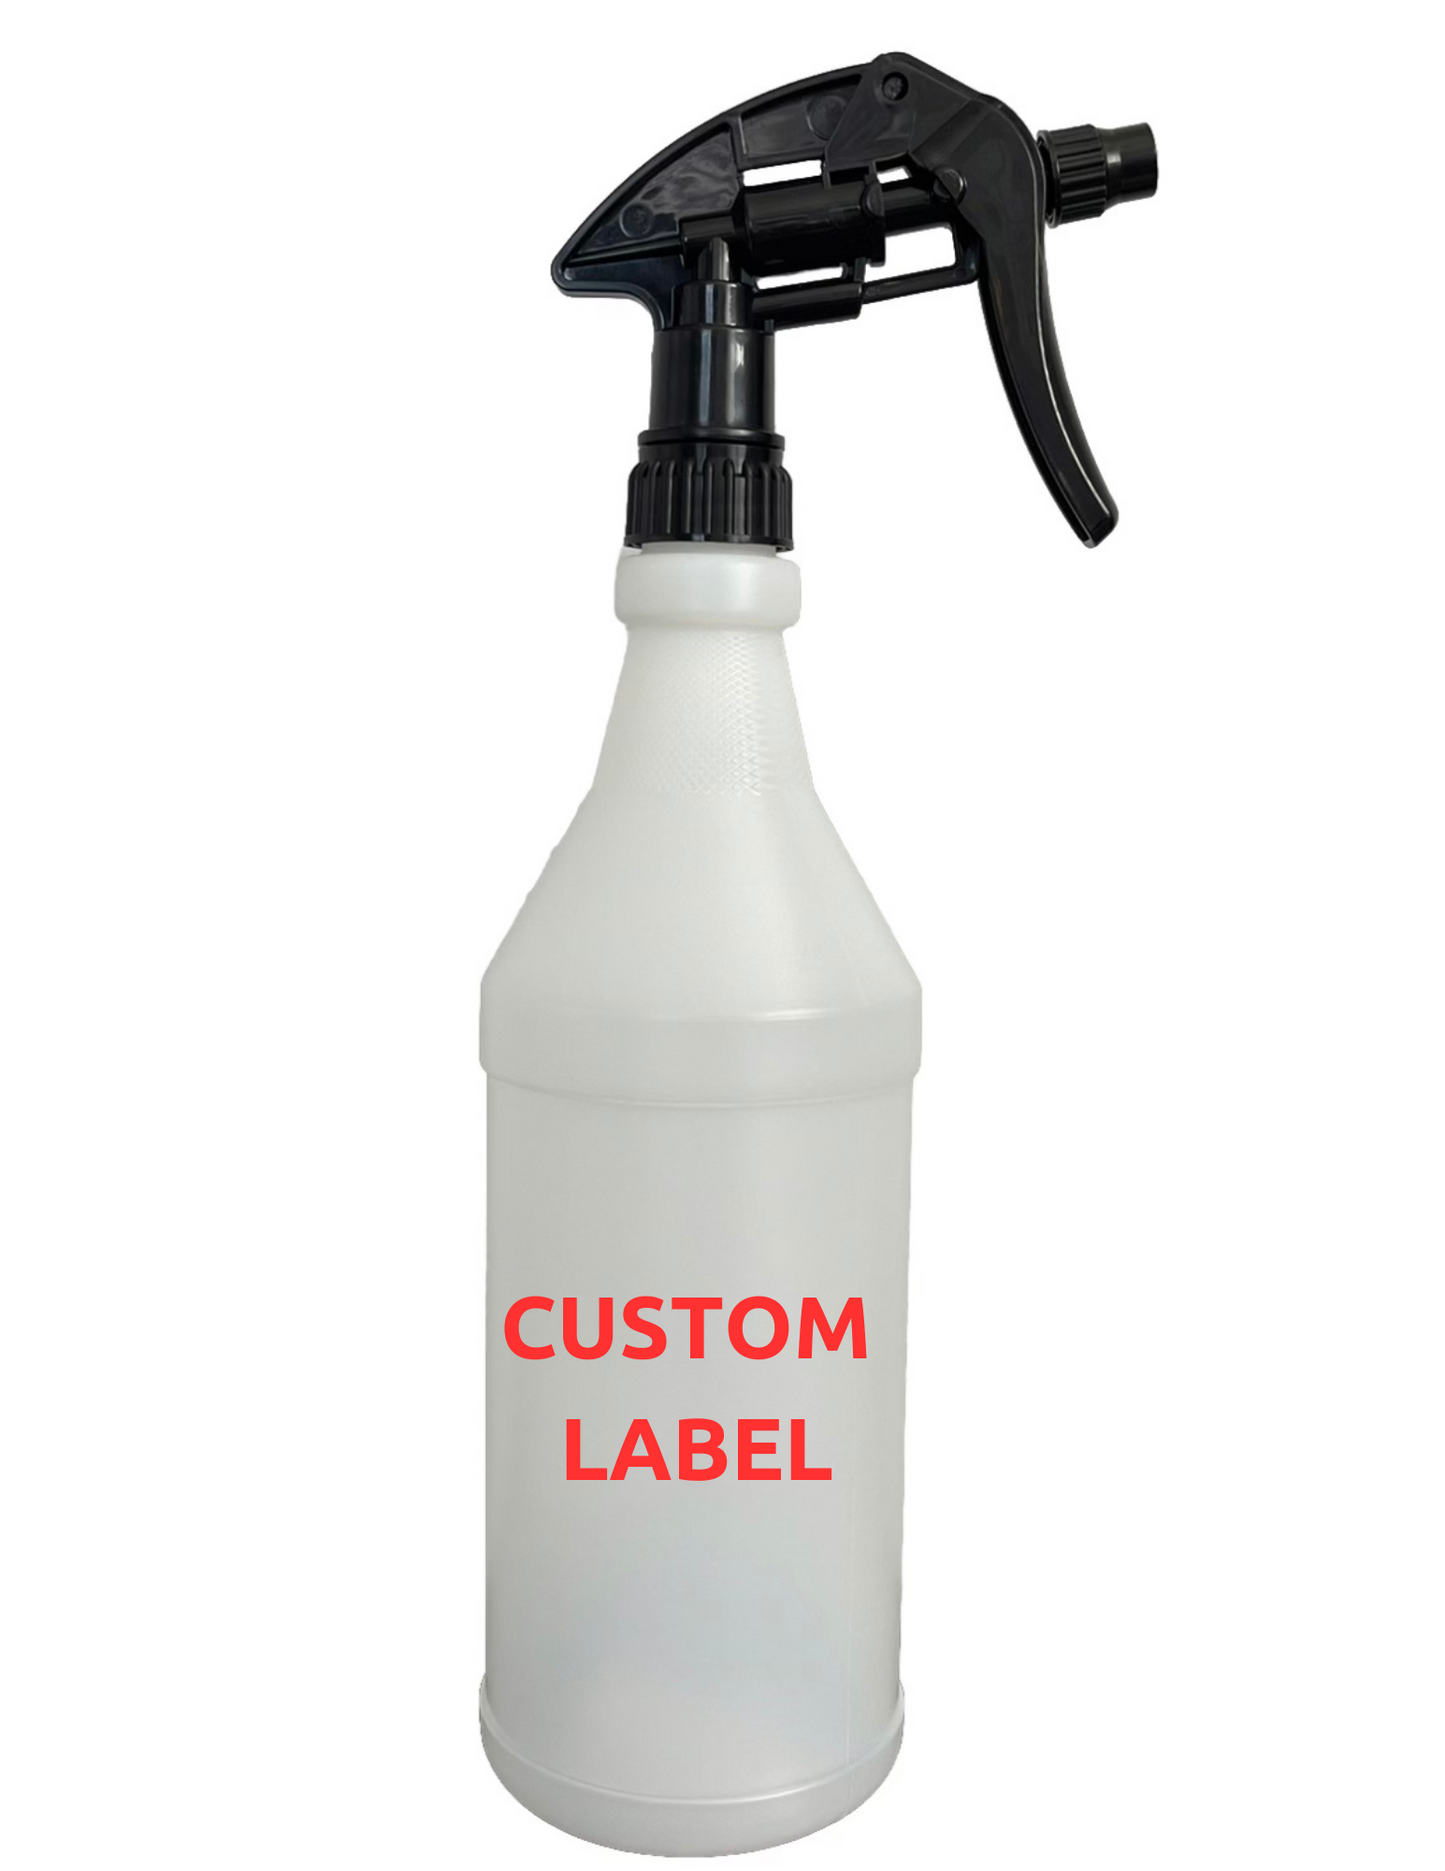 Royal Shine - 32 ounce Spray Bottles - Custom Label (84 Units)